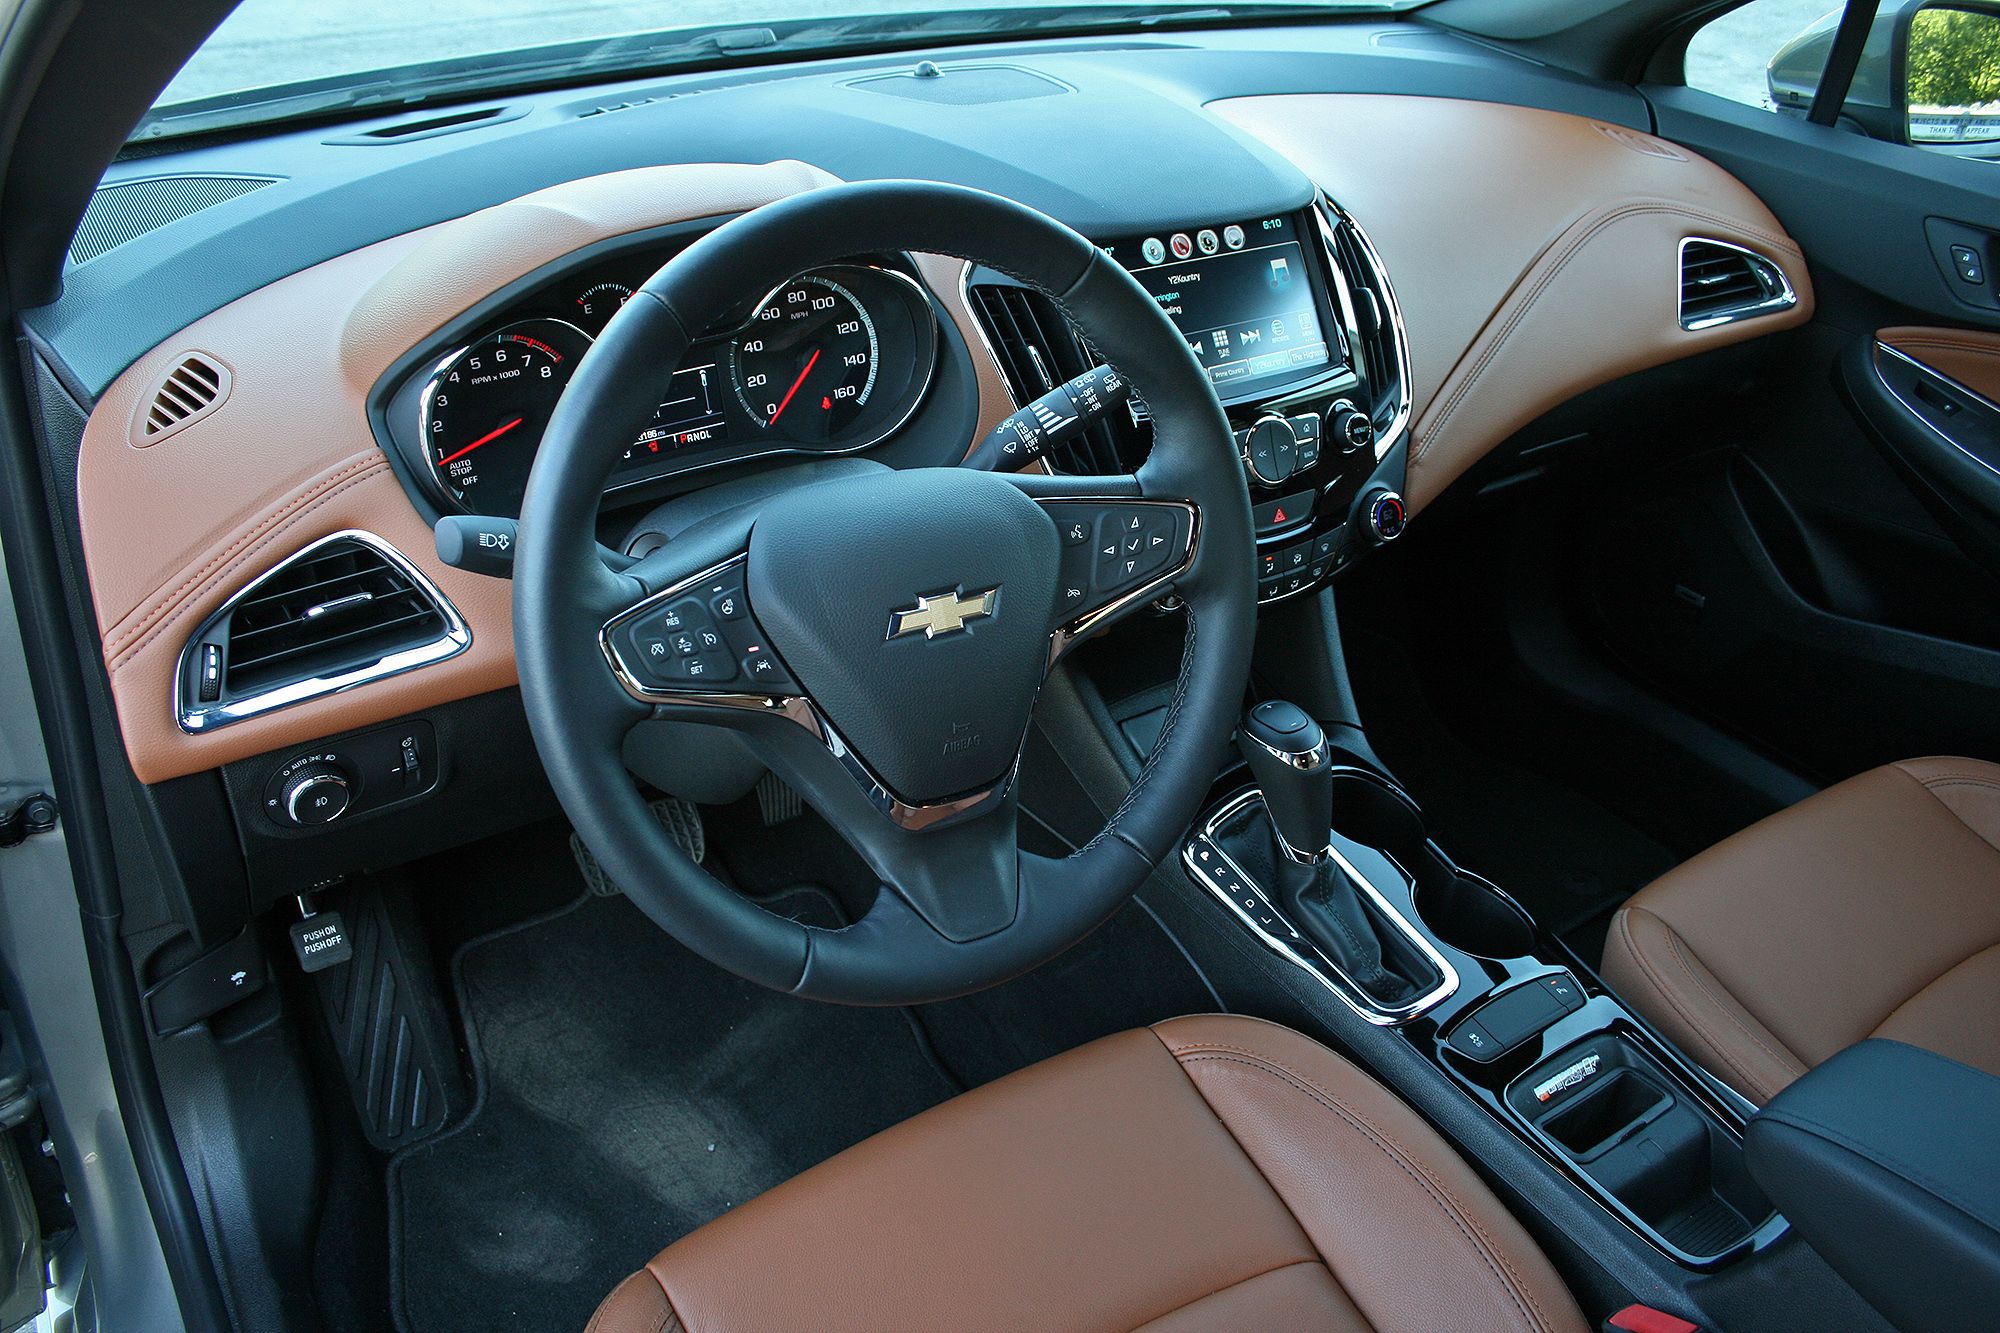 2017 Chevrolet Cruze Hatchback – Driven